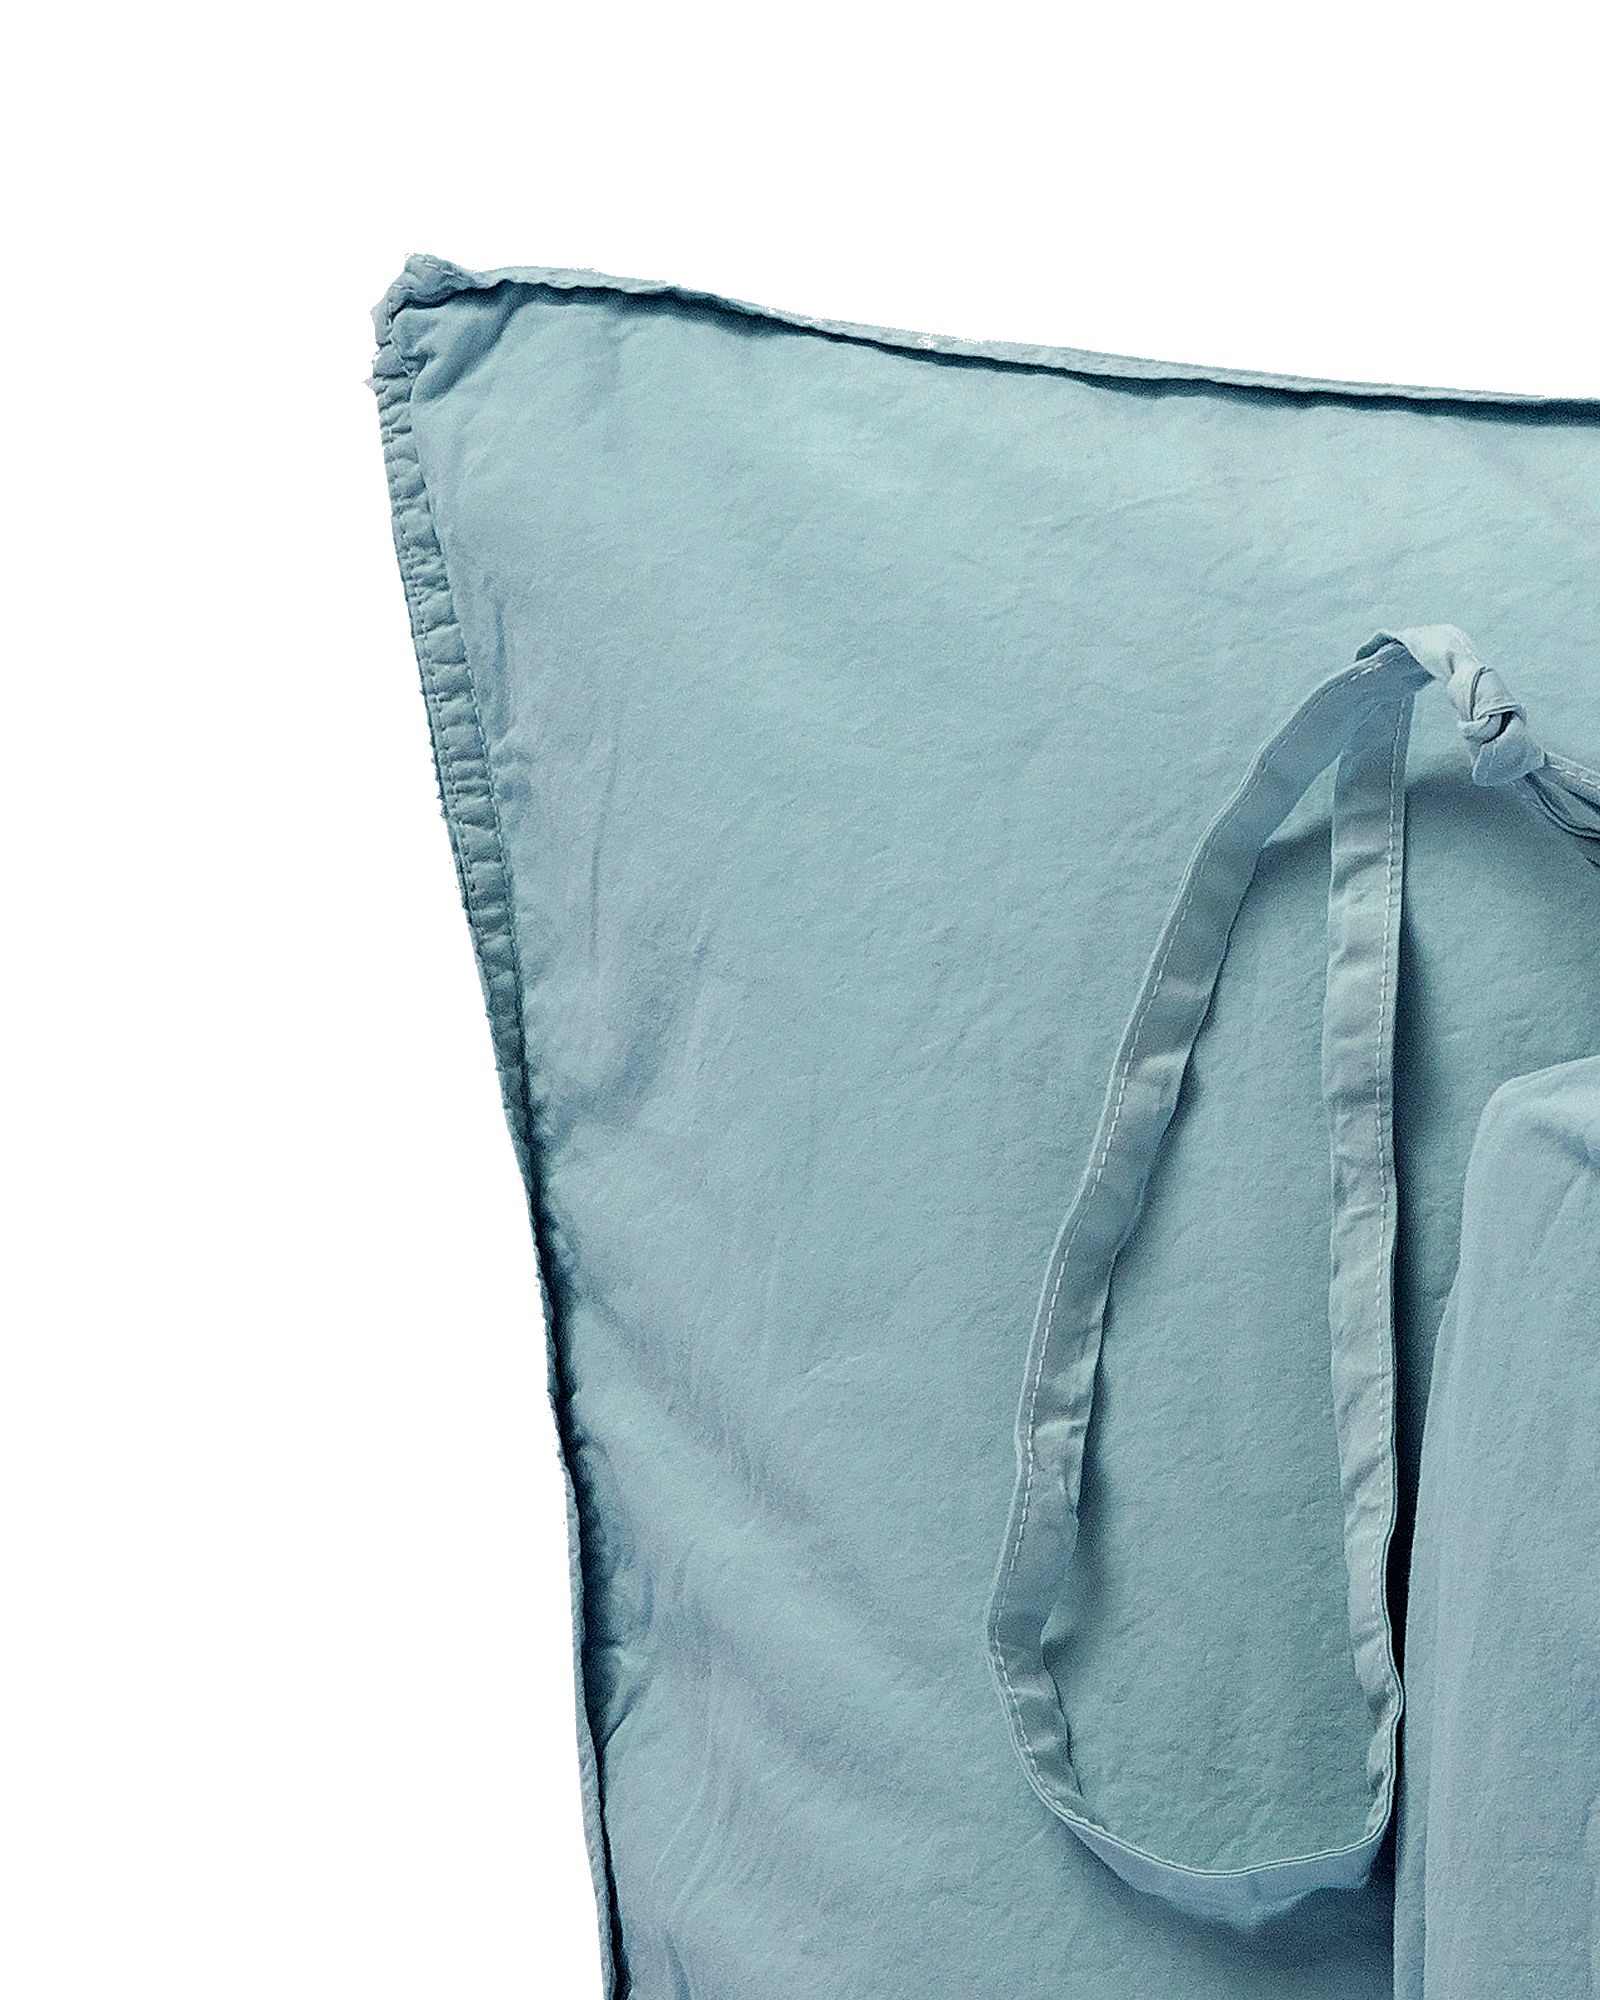 MARIE-MARIE - Pillowcase VINTAGE COTTON Ocean - 50x75 cm - Ocean